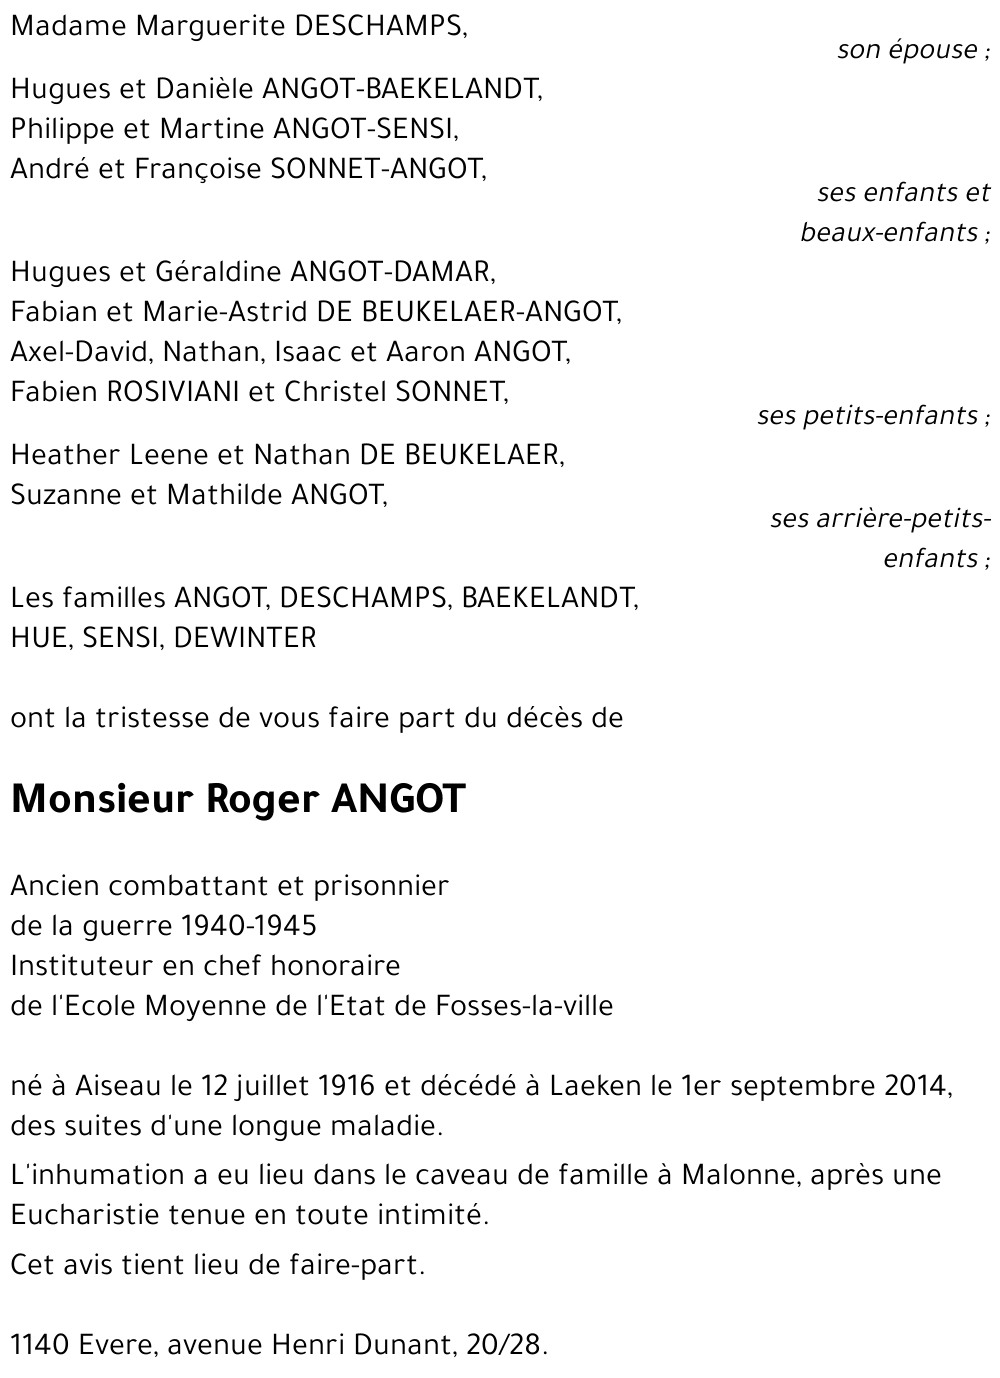 Roger ANGOT